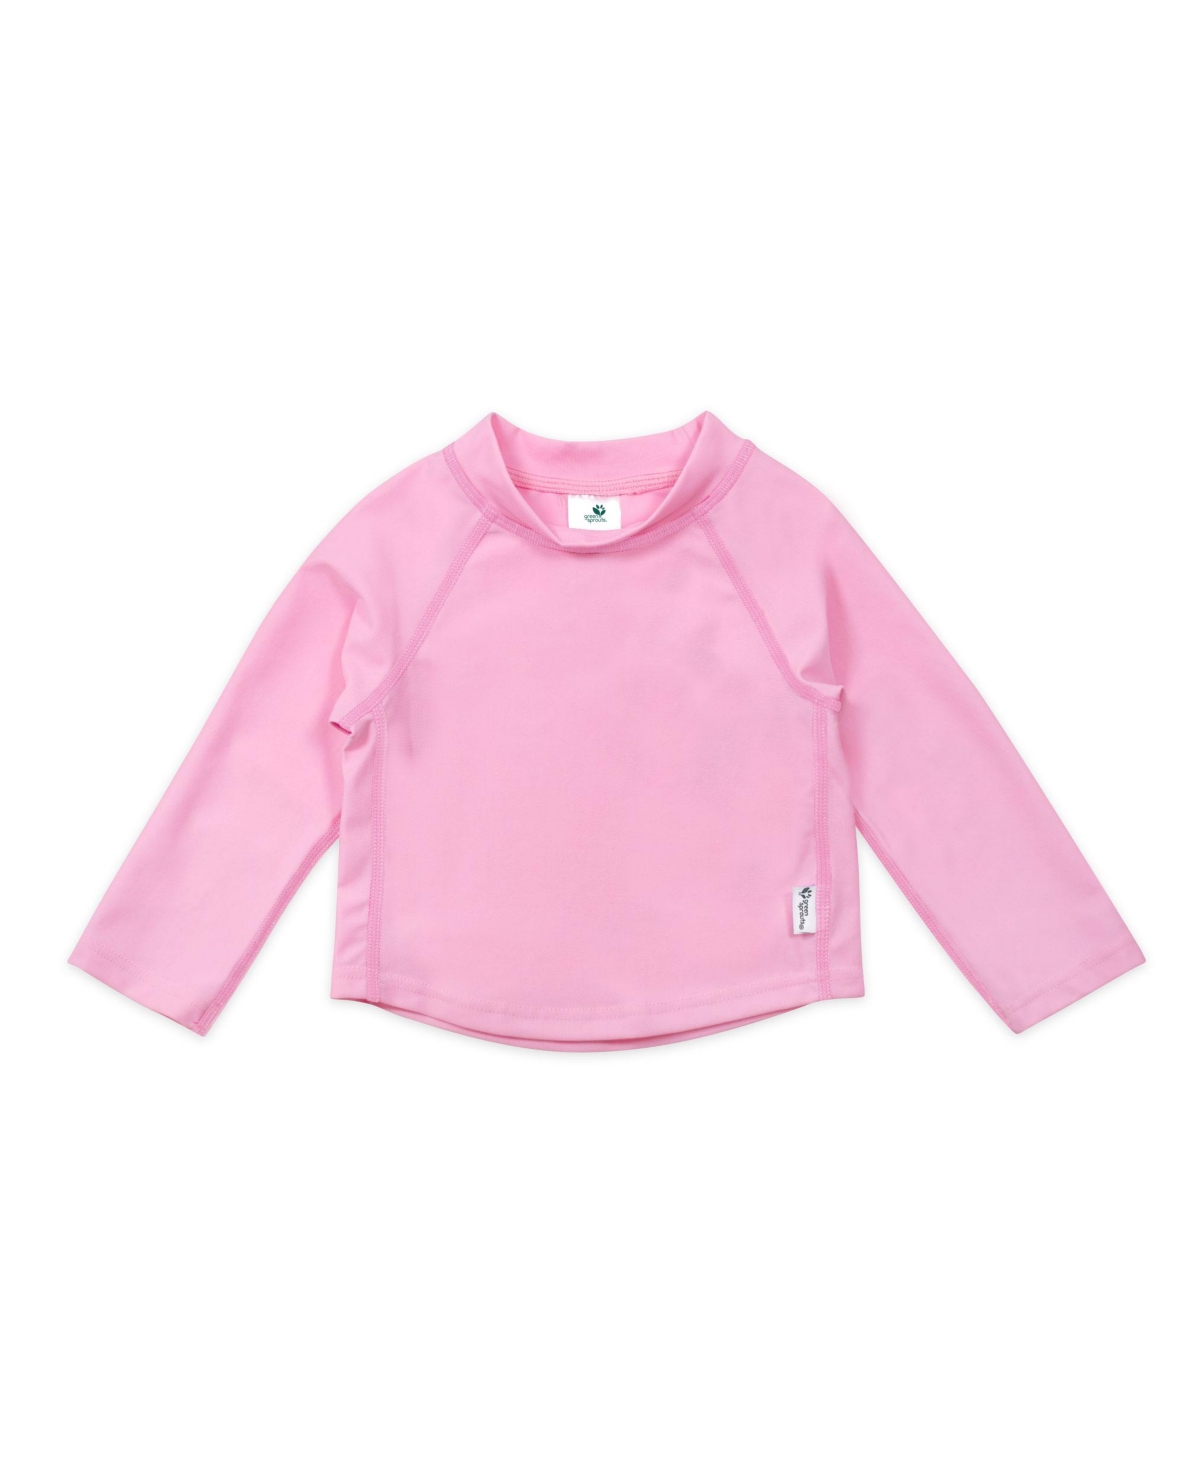 Green Sprouts Baby Boys Or Baby Girls Long Sleeve Rashgaurd Shirt Upf 50 In Light Pink